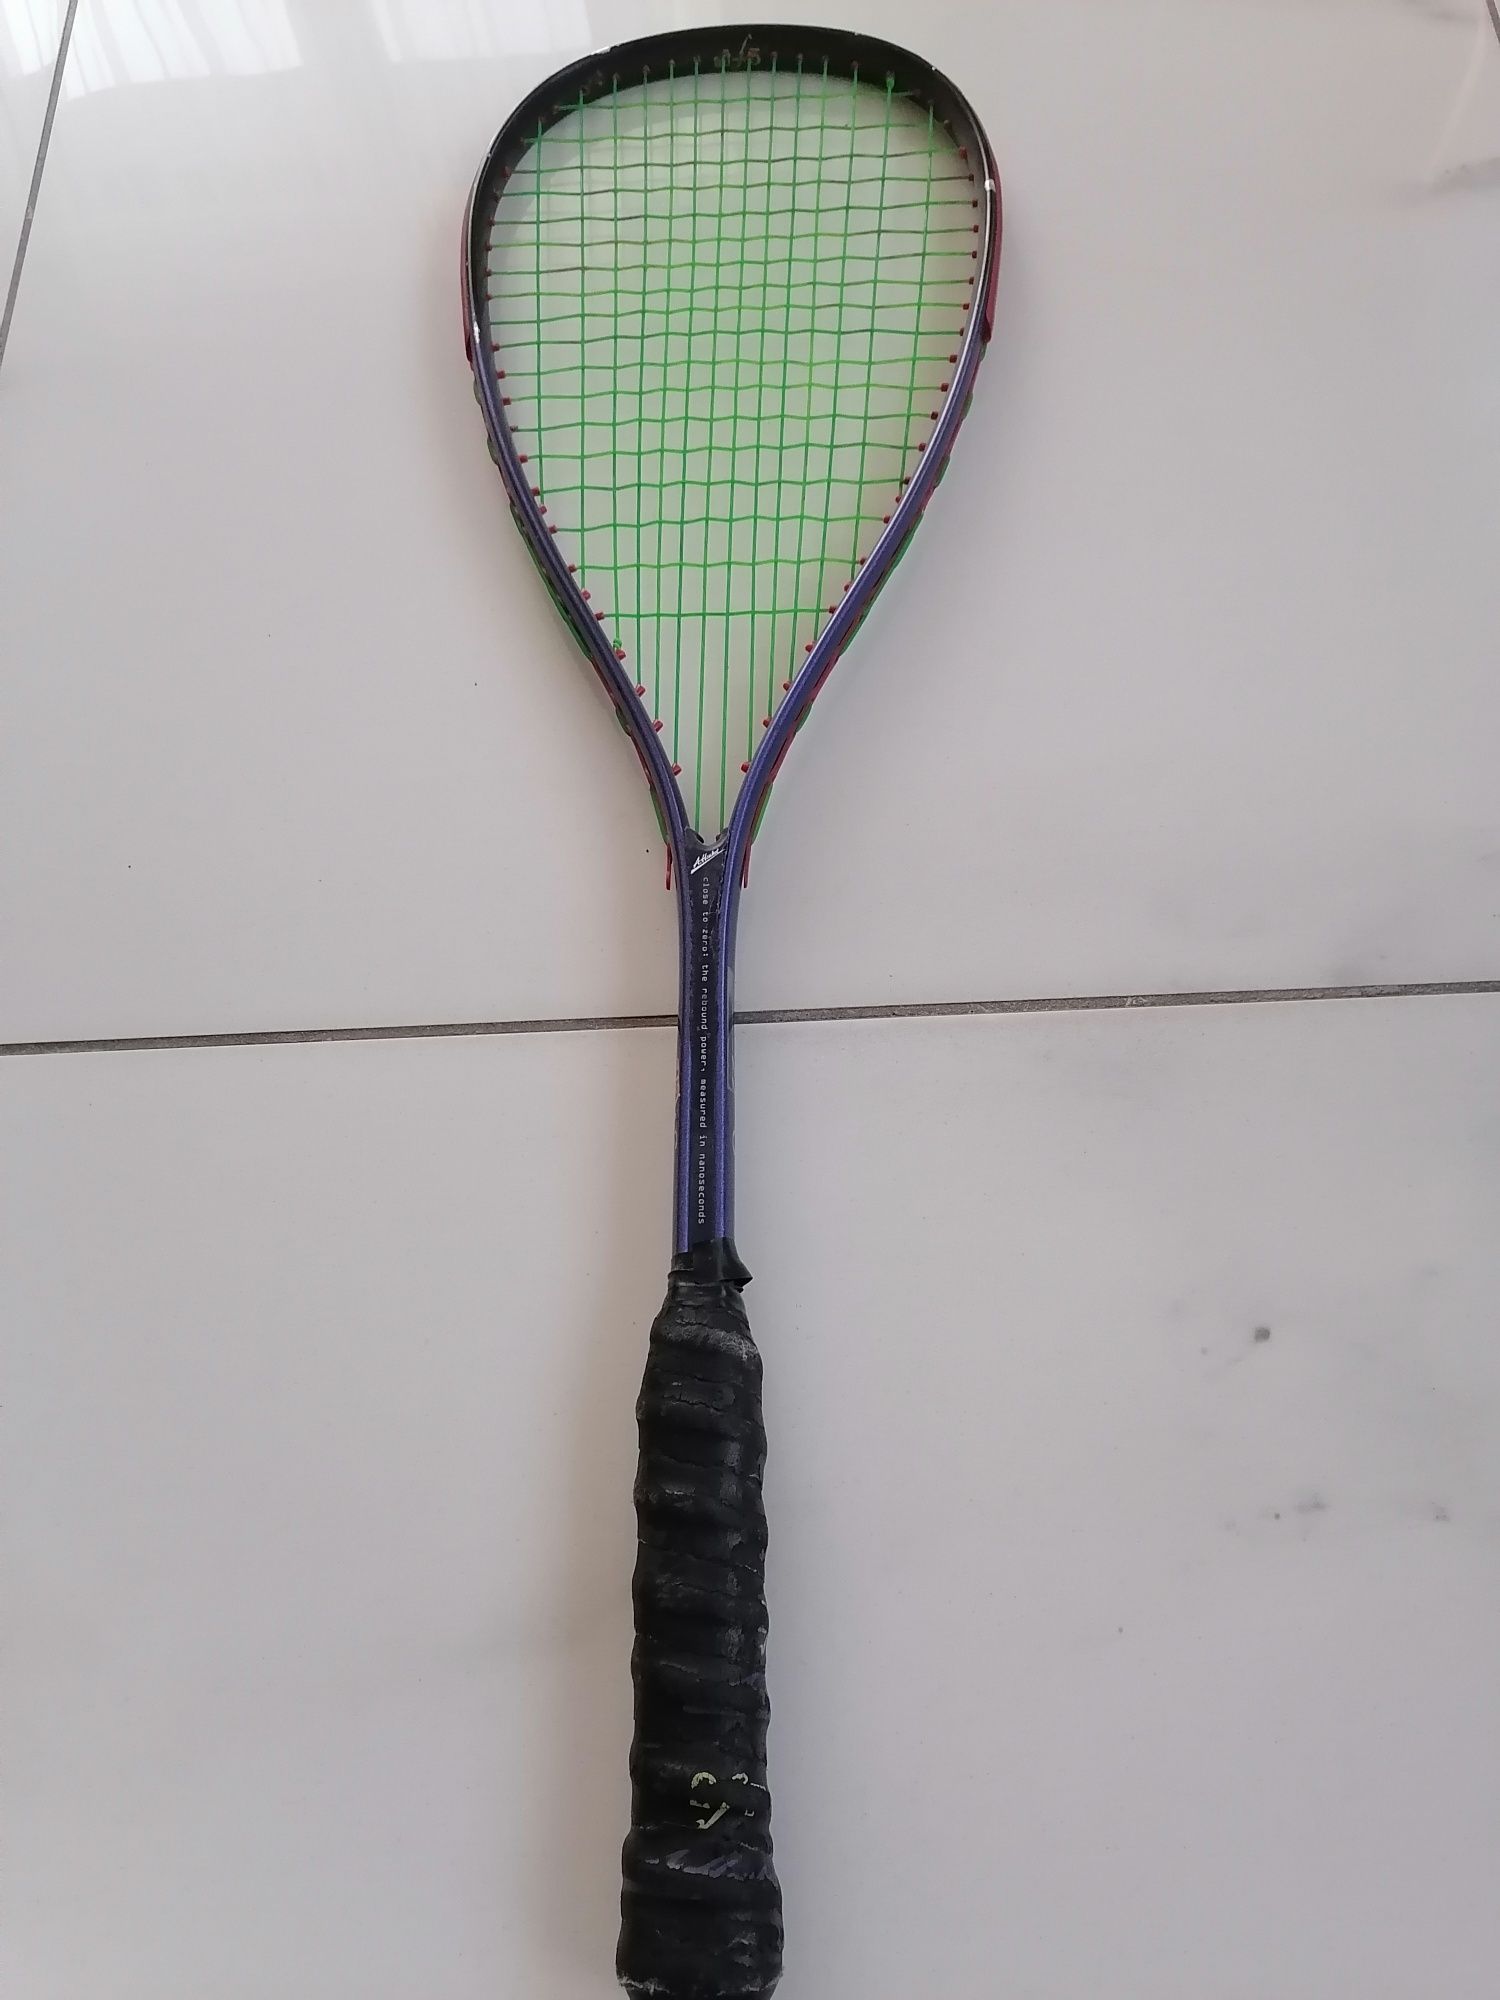 Badminton tenis squash rakieta dunlop kometka paletka sqoush